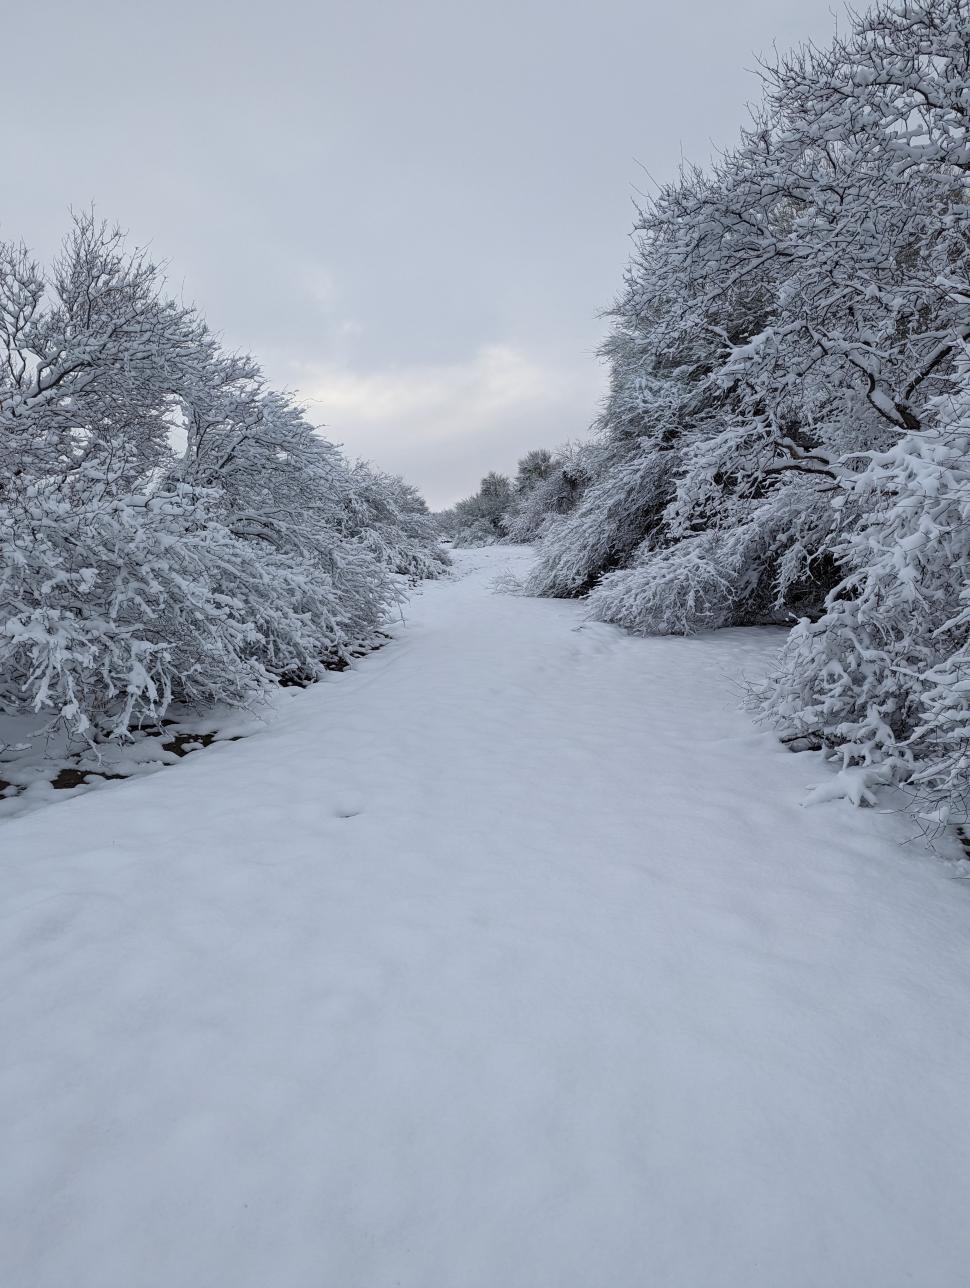 Free Image of Arizona Winter Snow 